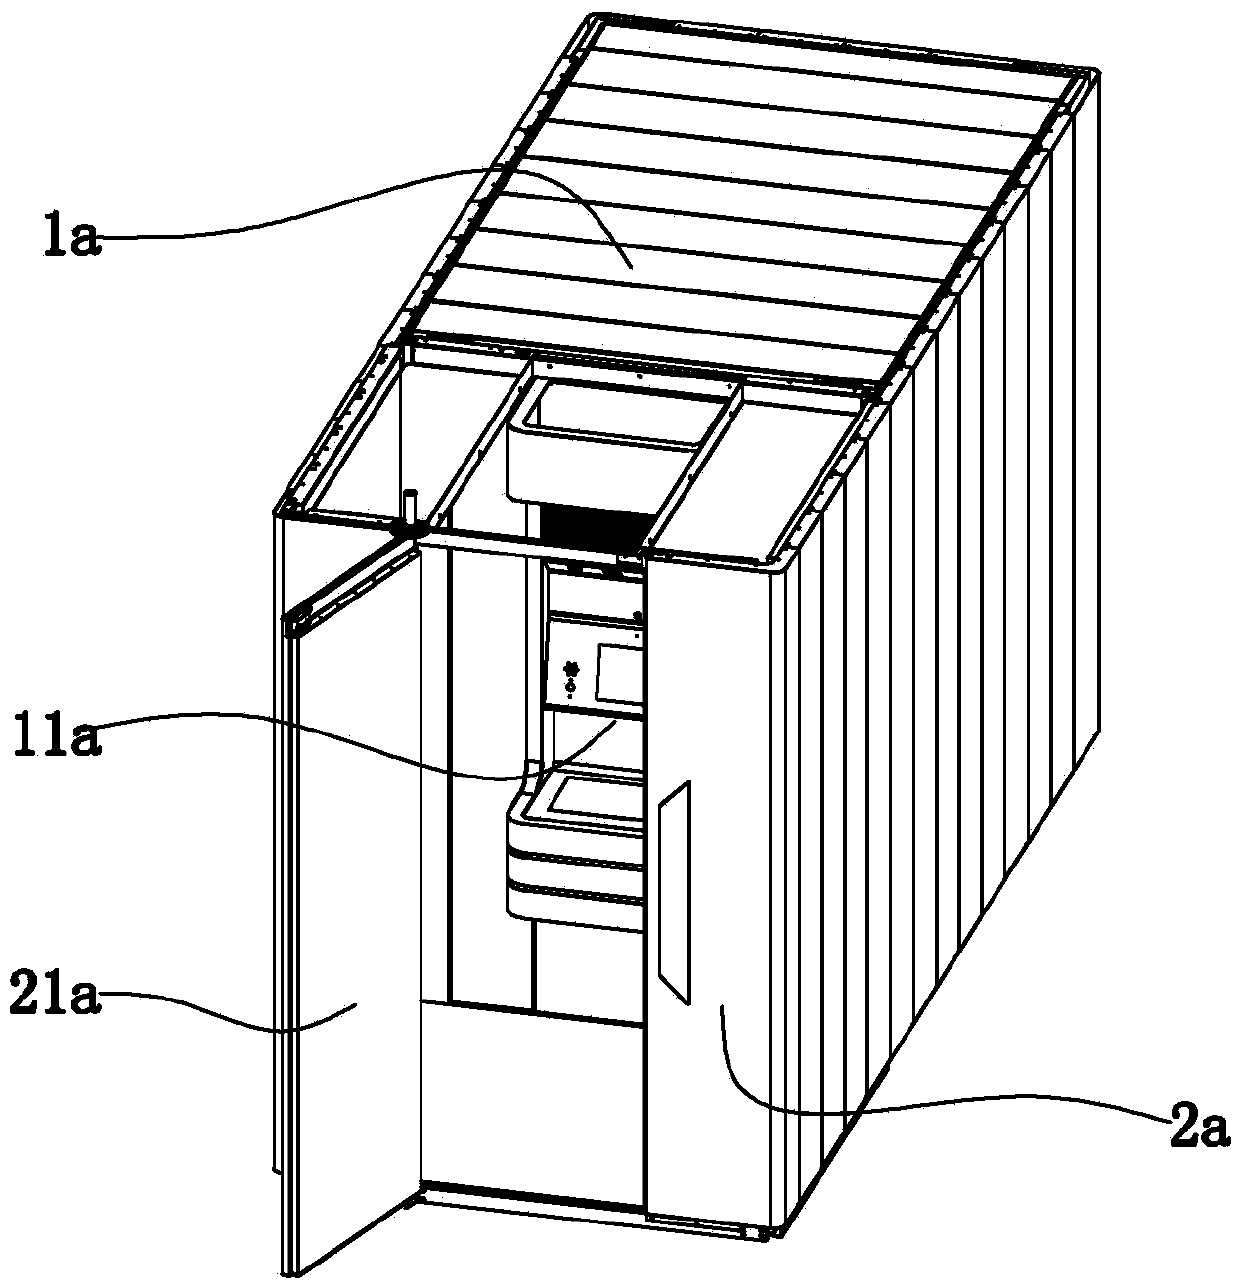 Mini-size safe deposit box